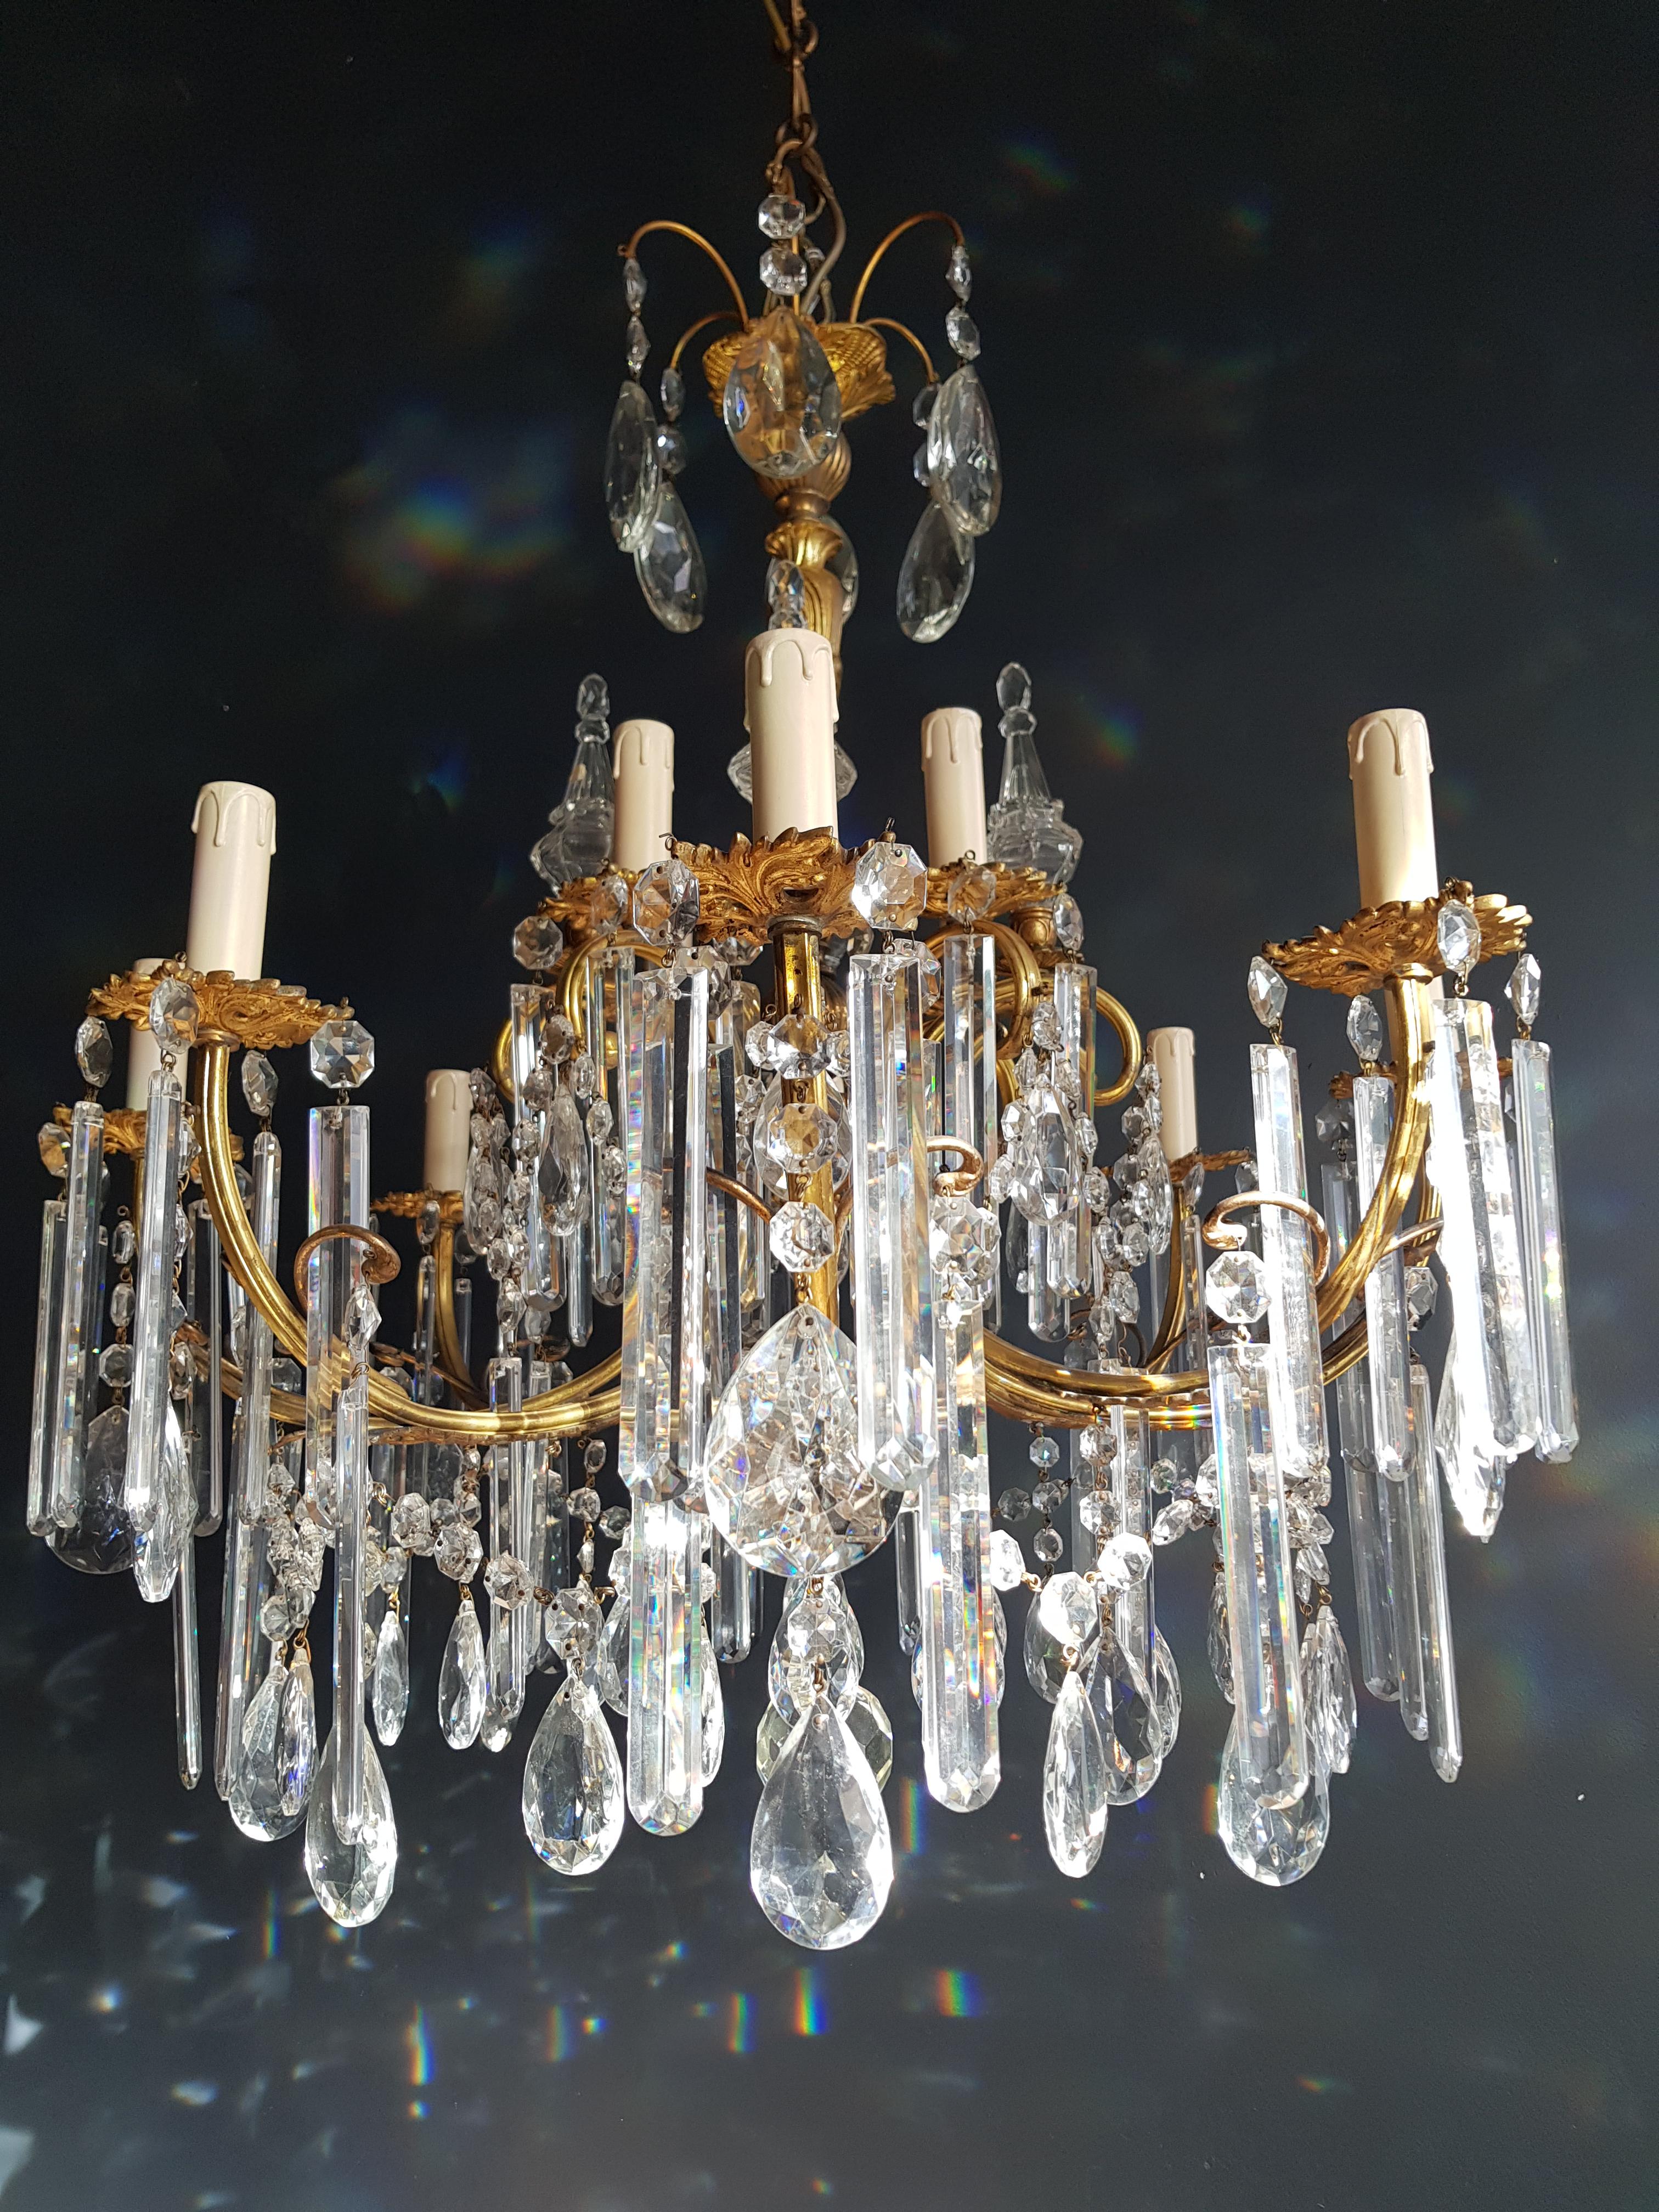 Gilded Crystal Bohemia Chandelier Antique Ceiling Lamp Lustre Art Nouveau Candel (Messing)